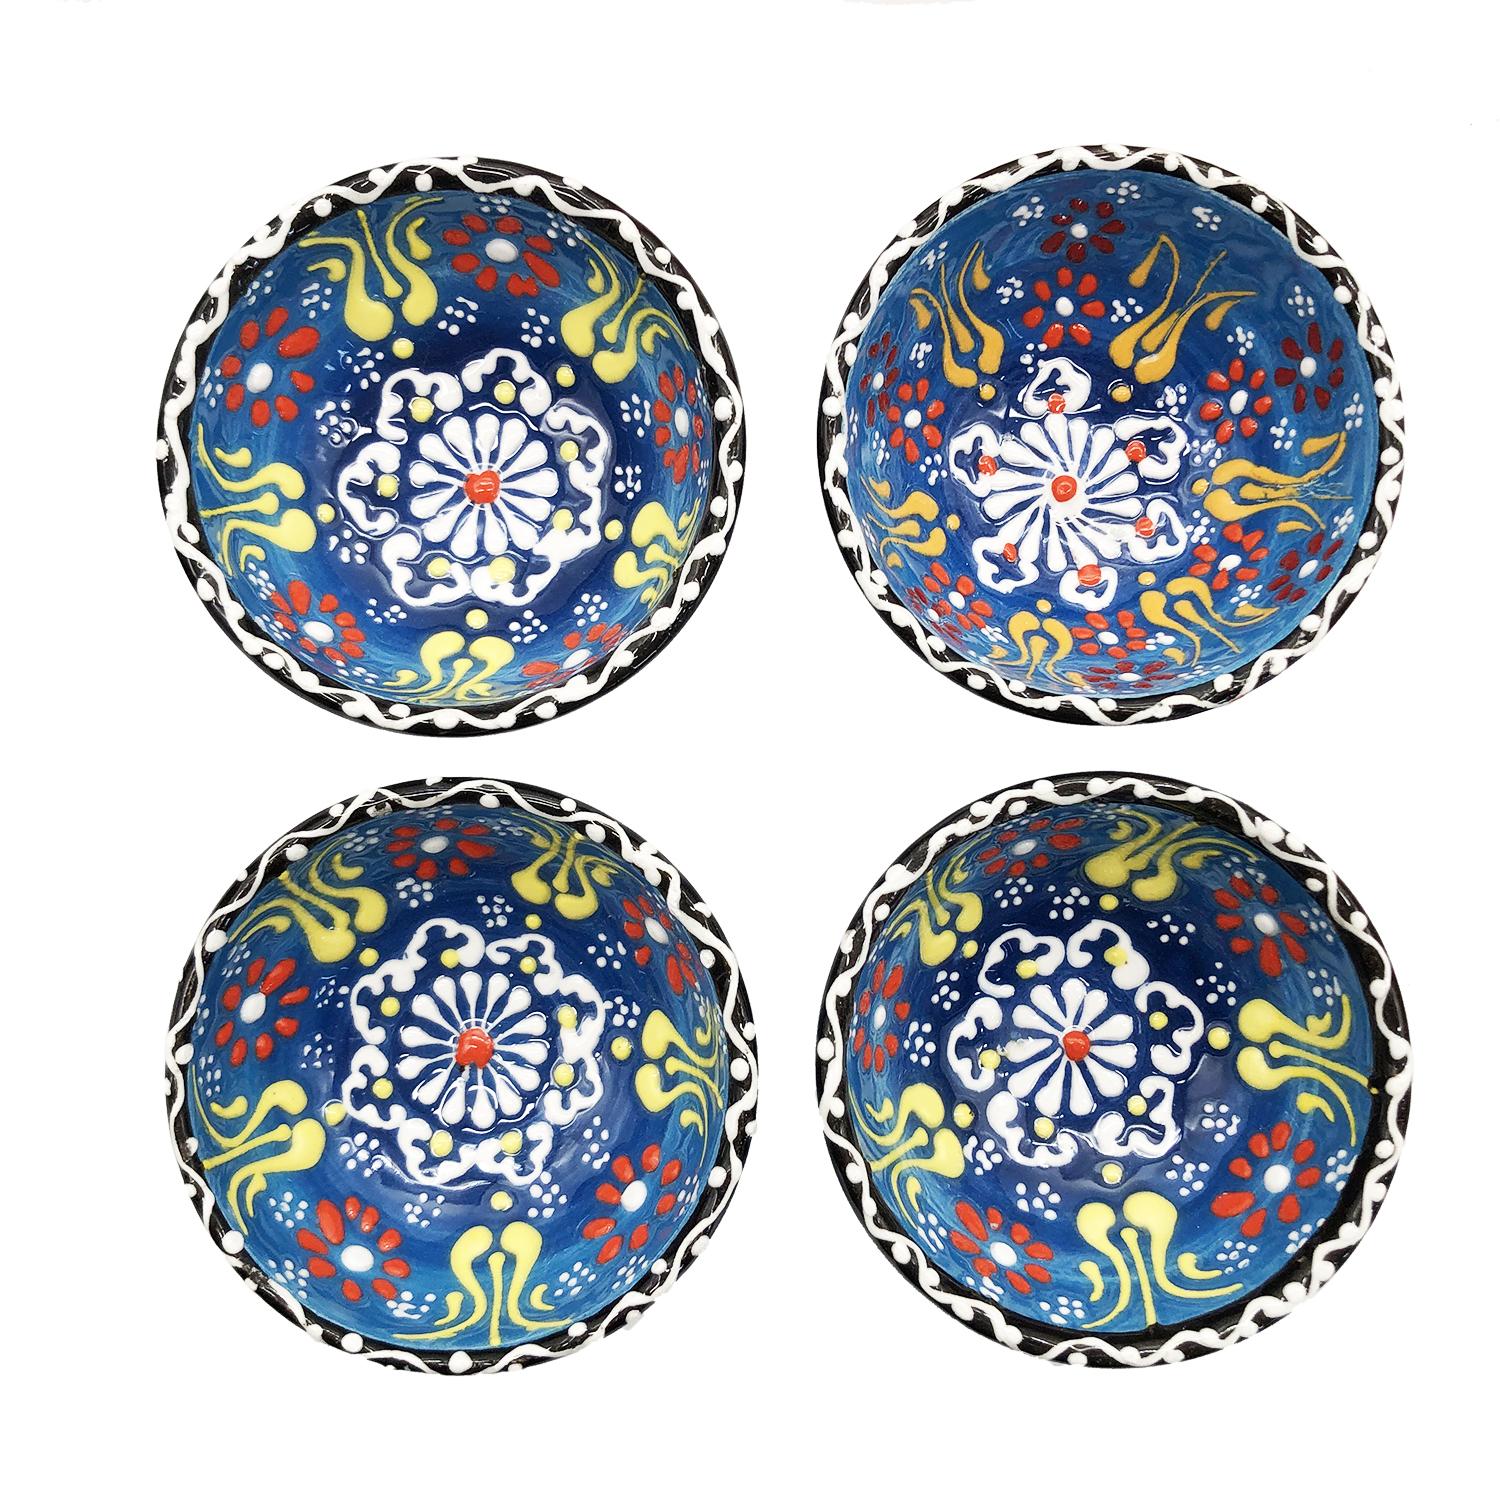 80MM手繪土耳其傳統工藝陶瓷碗， 土耳其餐具奧斯曼帝國浮雕圖案土耳其藝術時尚潮物(VTR-CERAMIC-BOWL-80MM-30002)